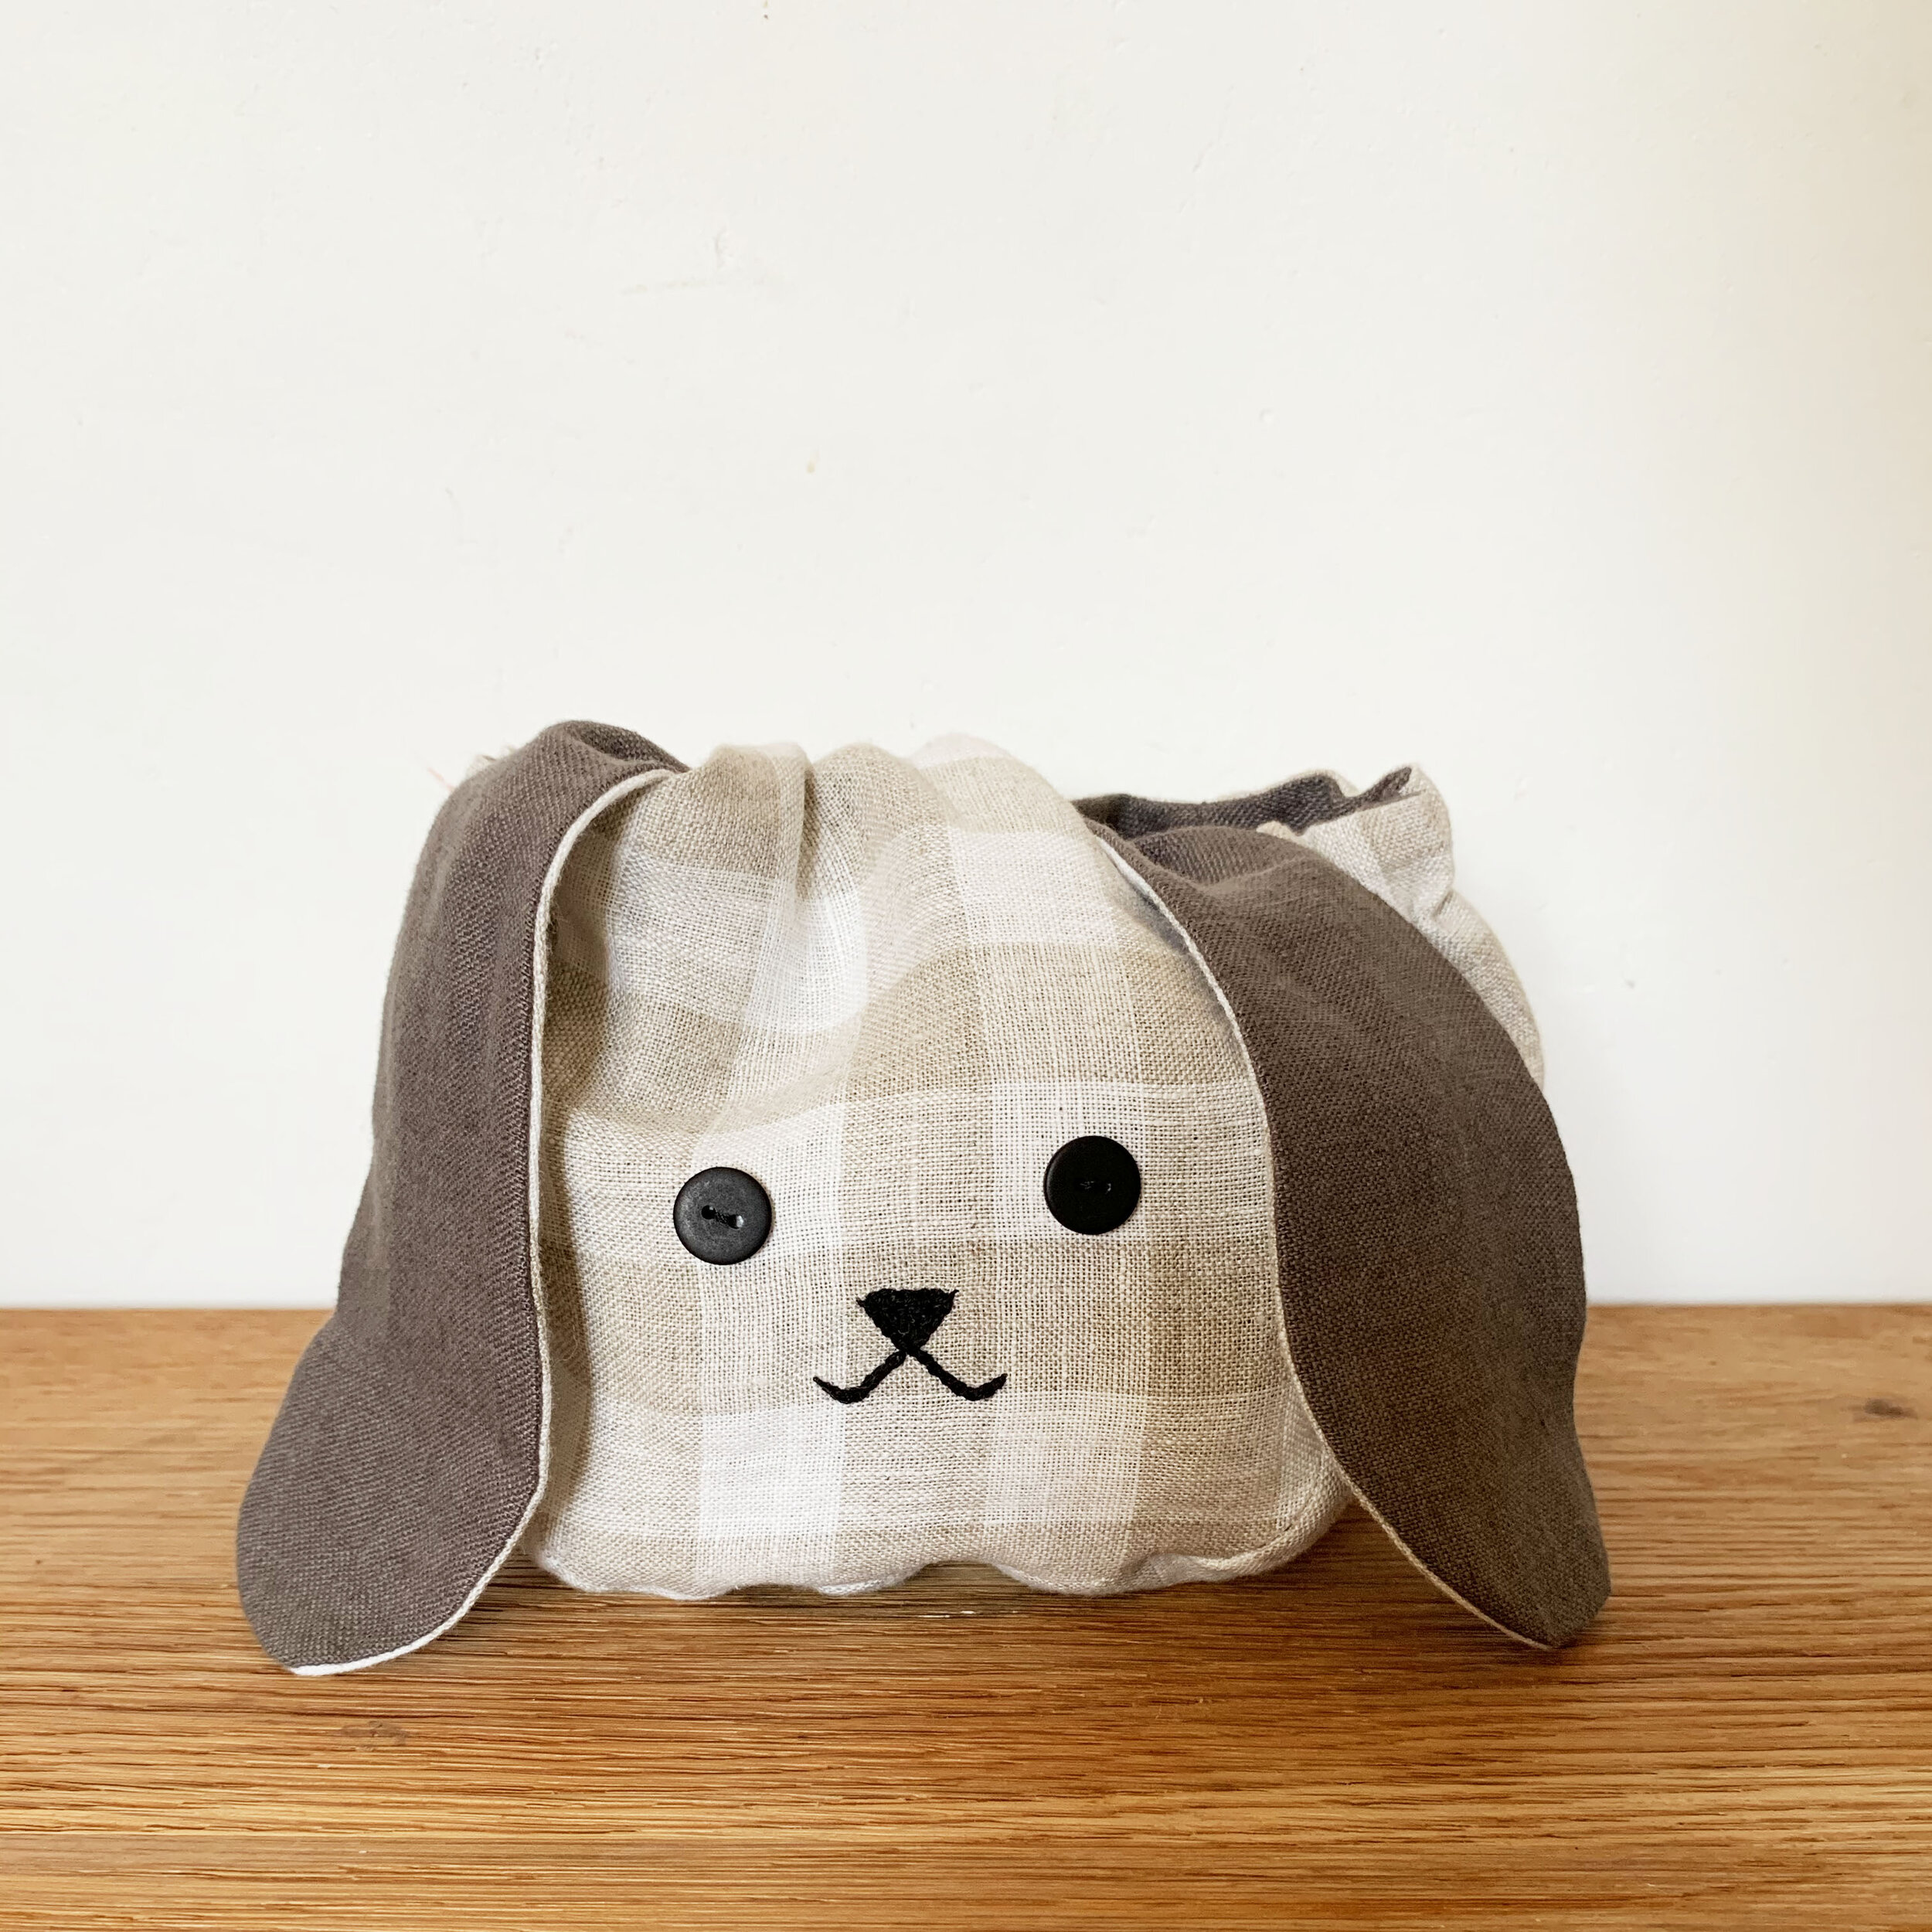 Bunny bag - pattern coming soon!